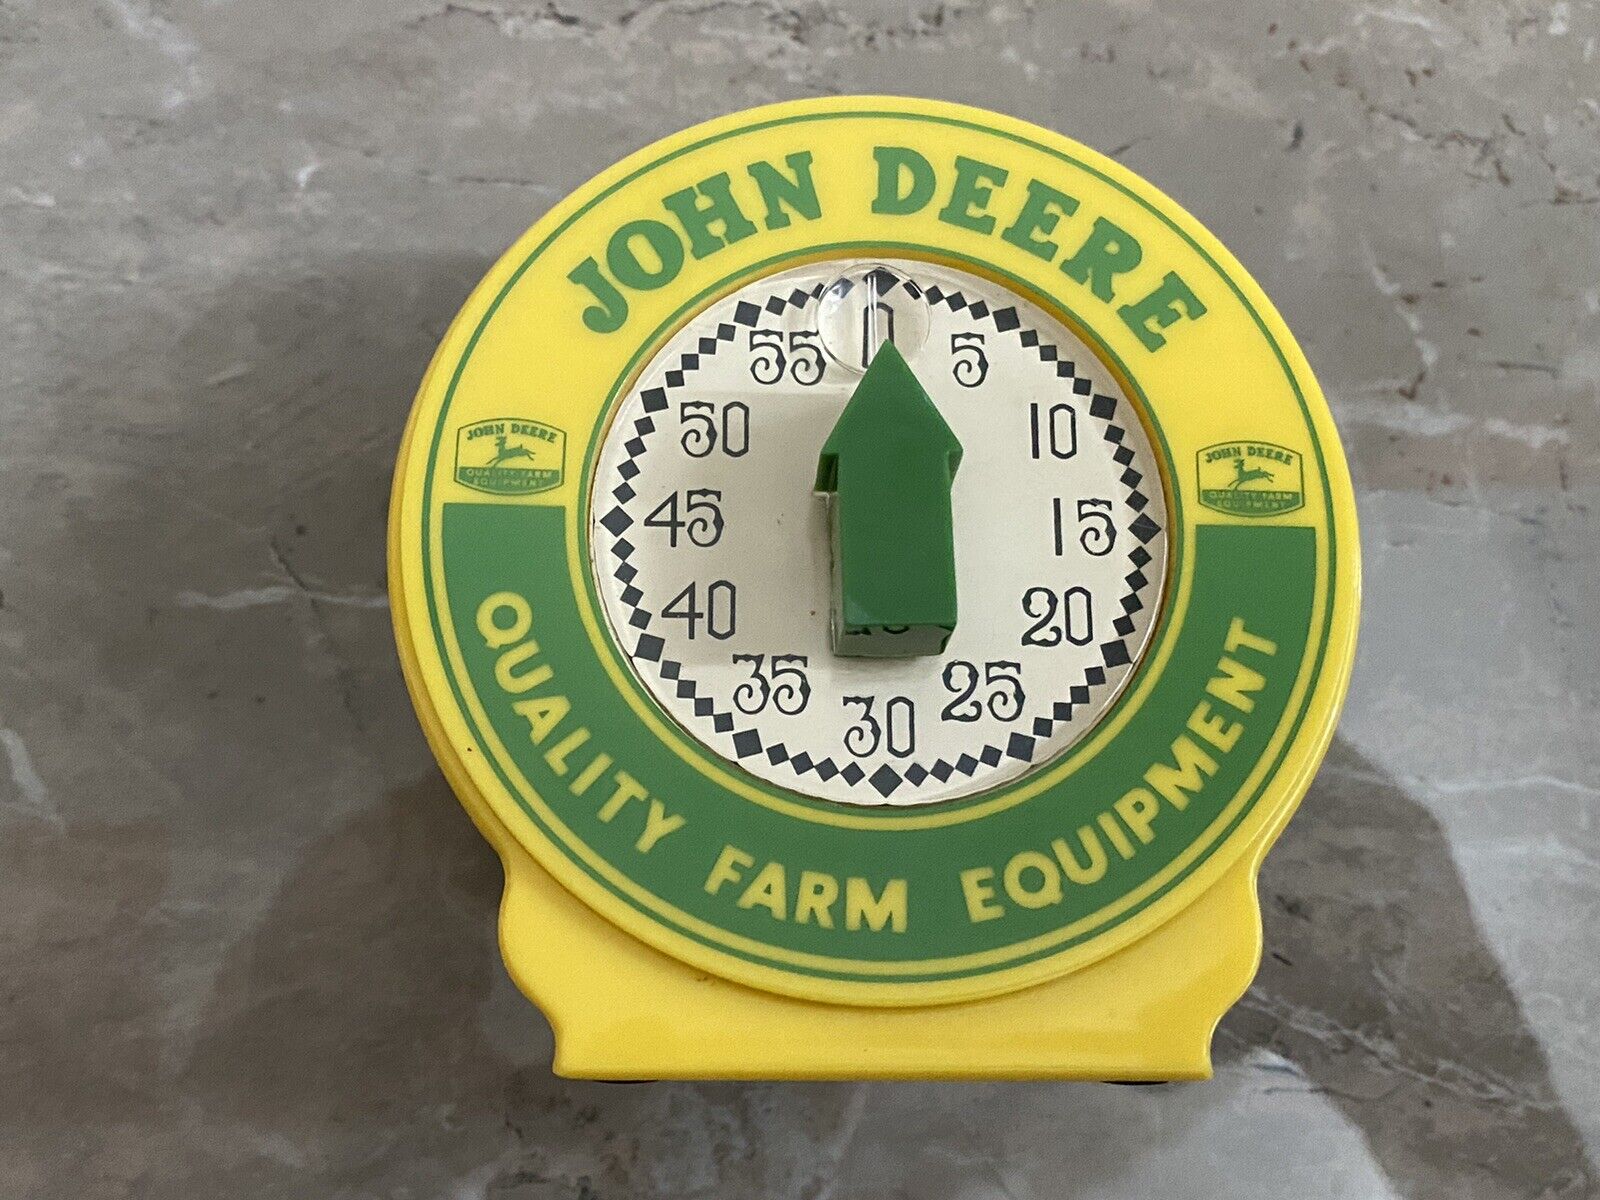 John Deere Quality Farm Equipment Green & Yellow Kitchen Timer - New In Box